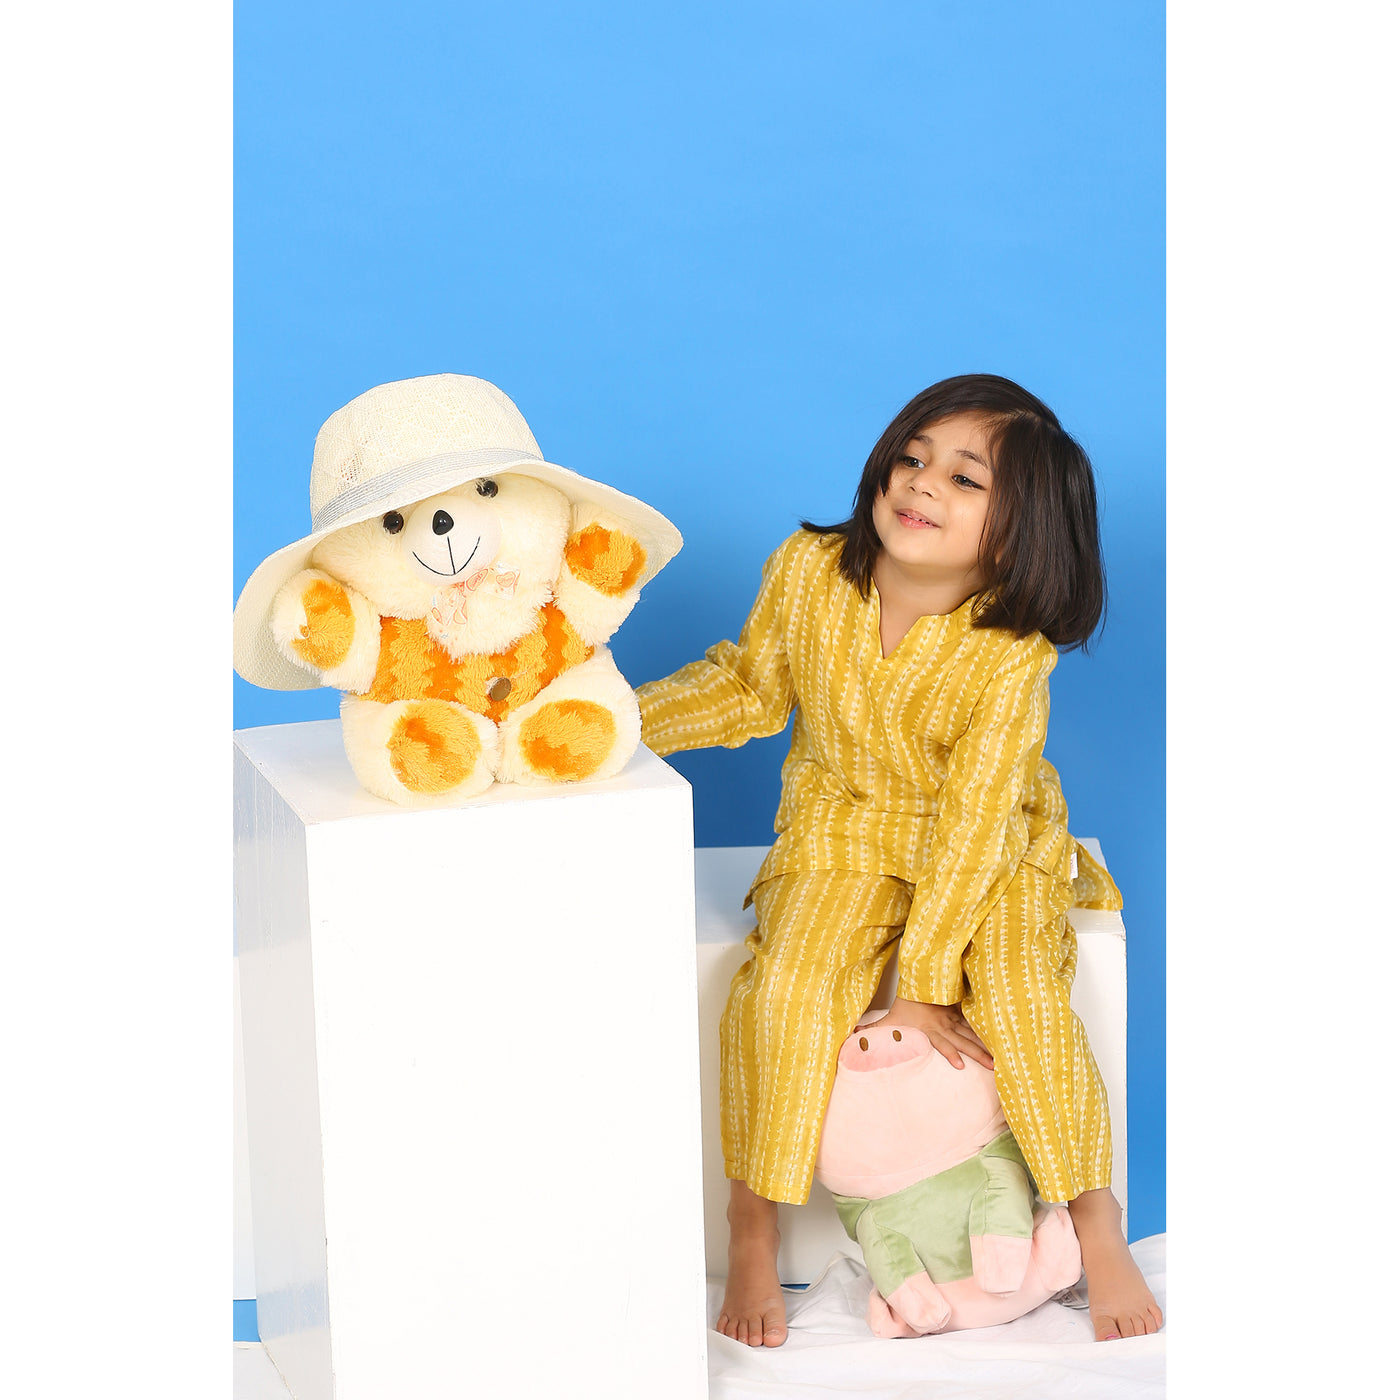 Shibori on Yellow Kids Loungewear Set